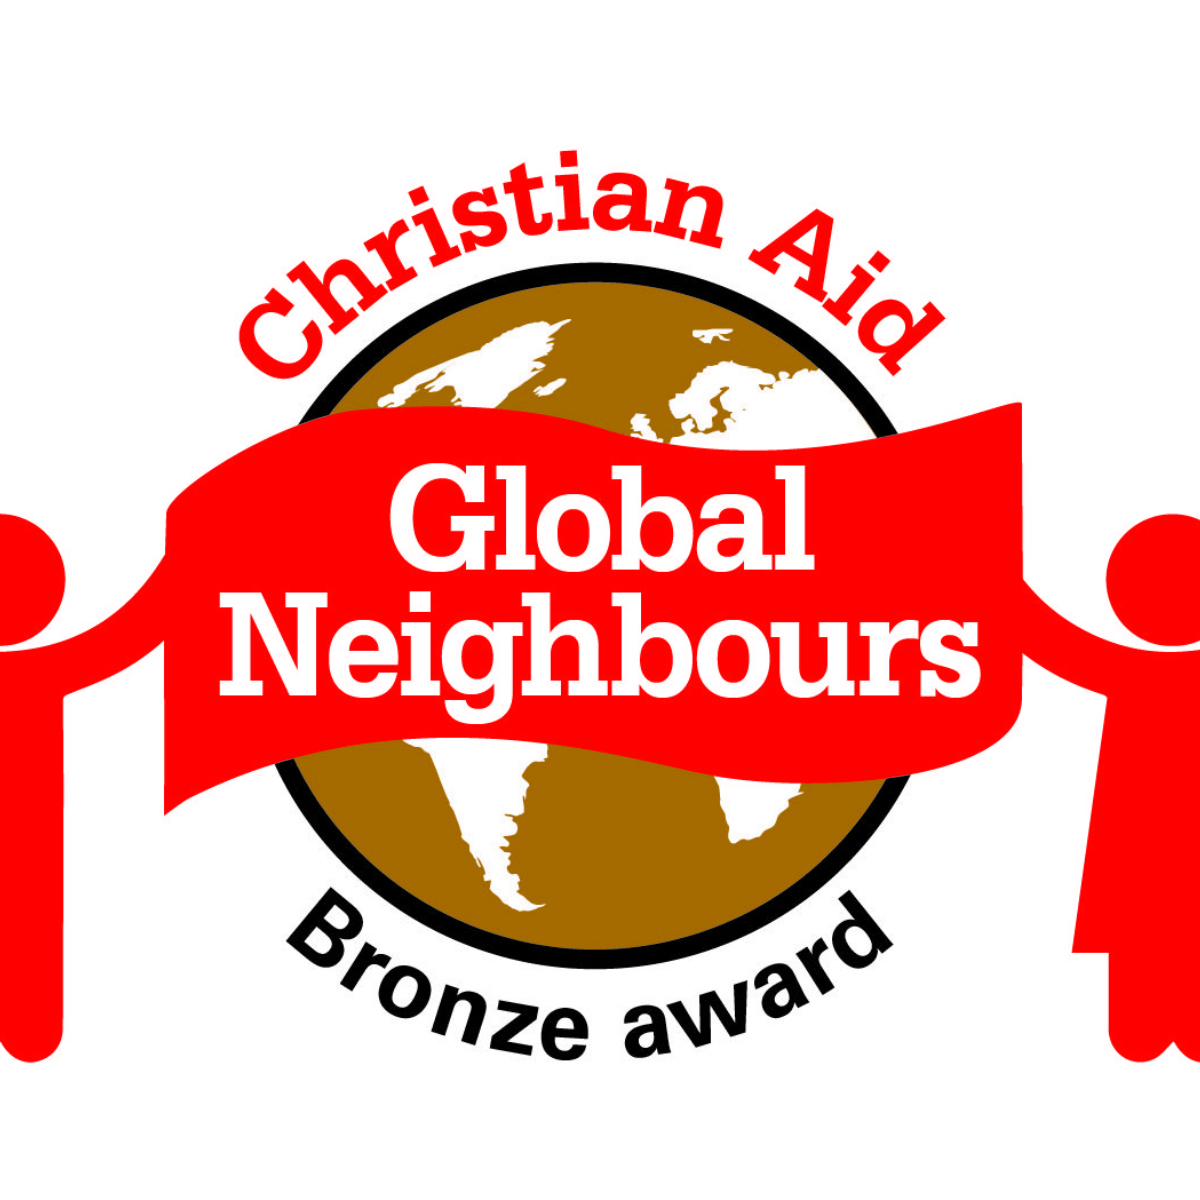 Church of England Junior School - St. Mary's Achieve Bronze Award